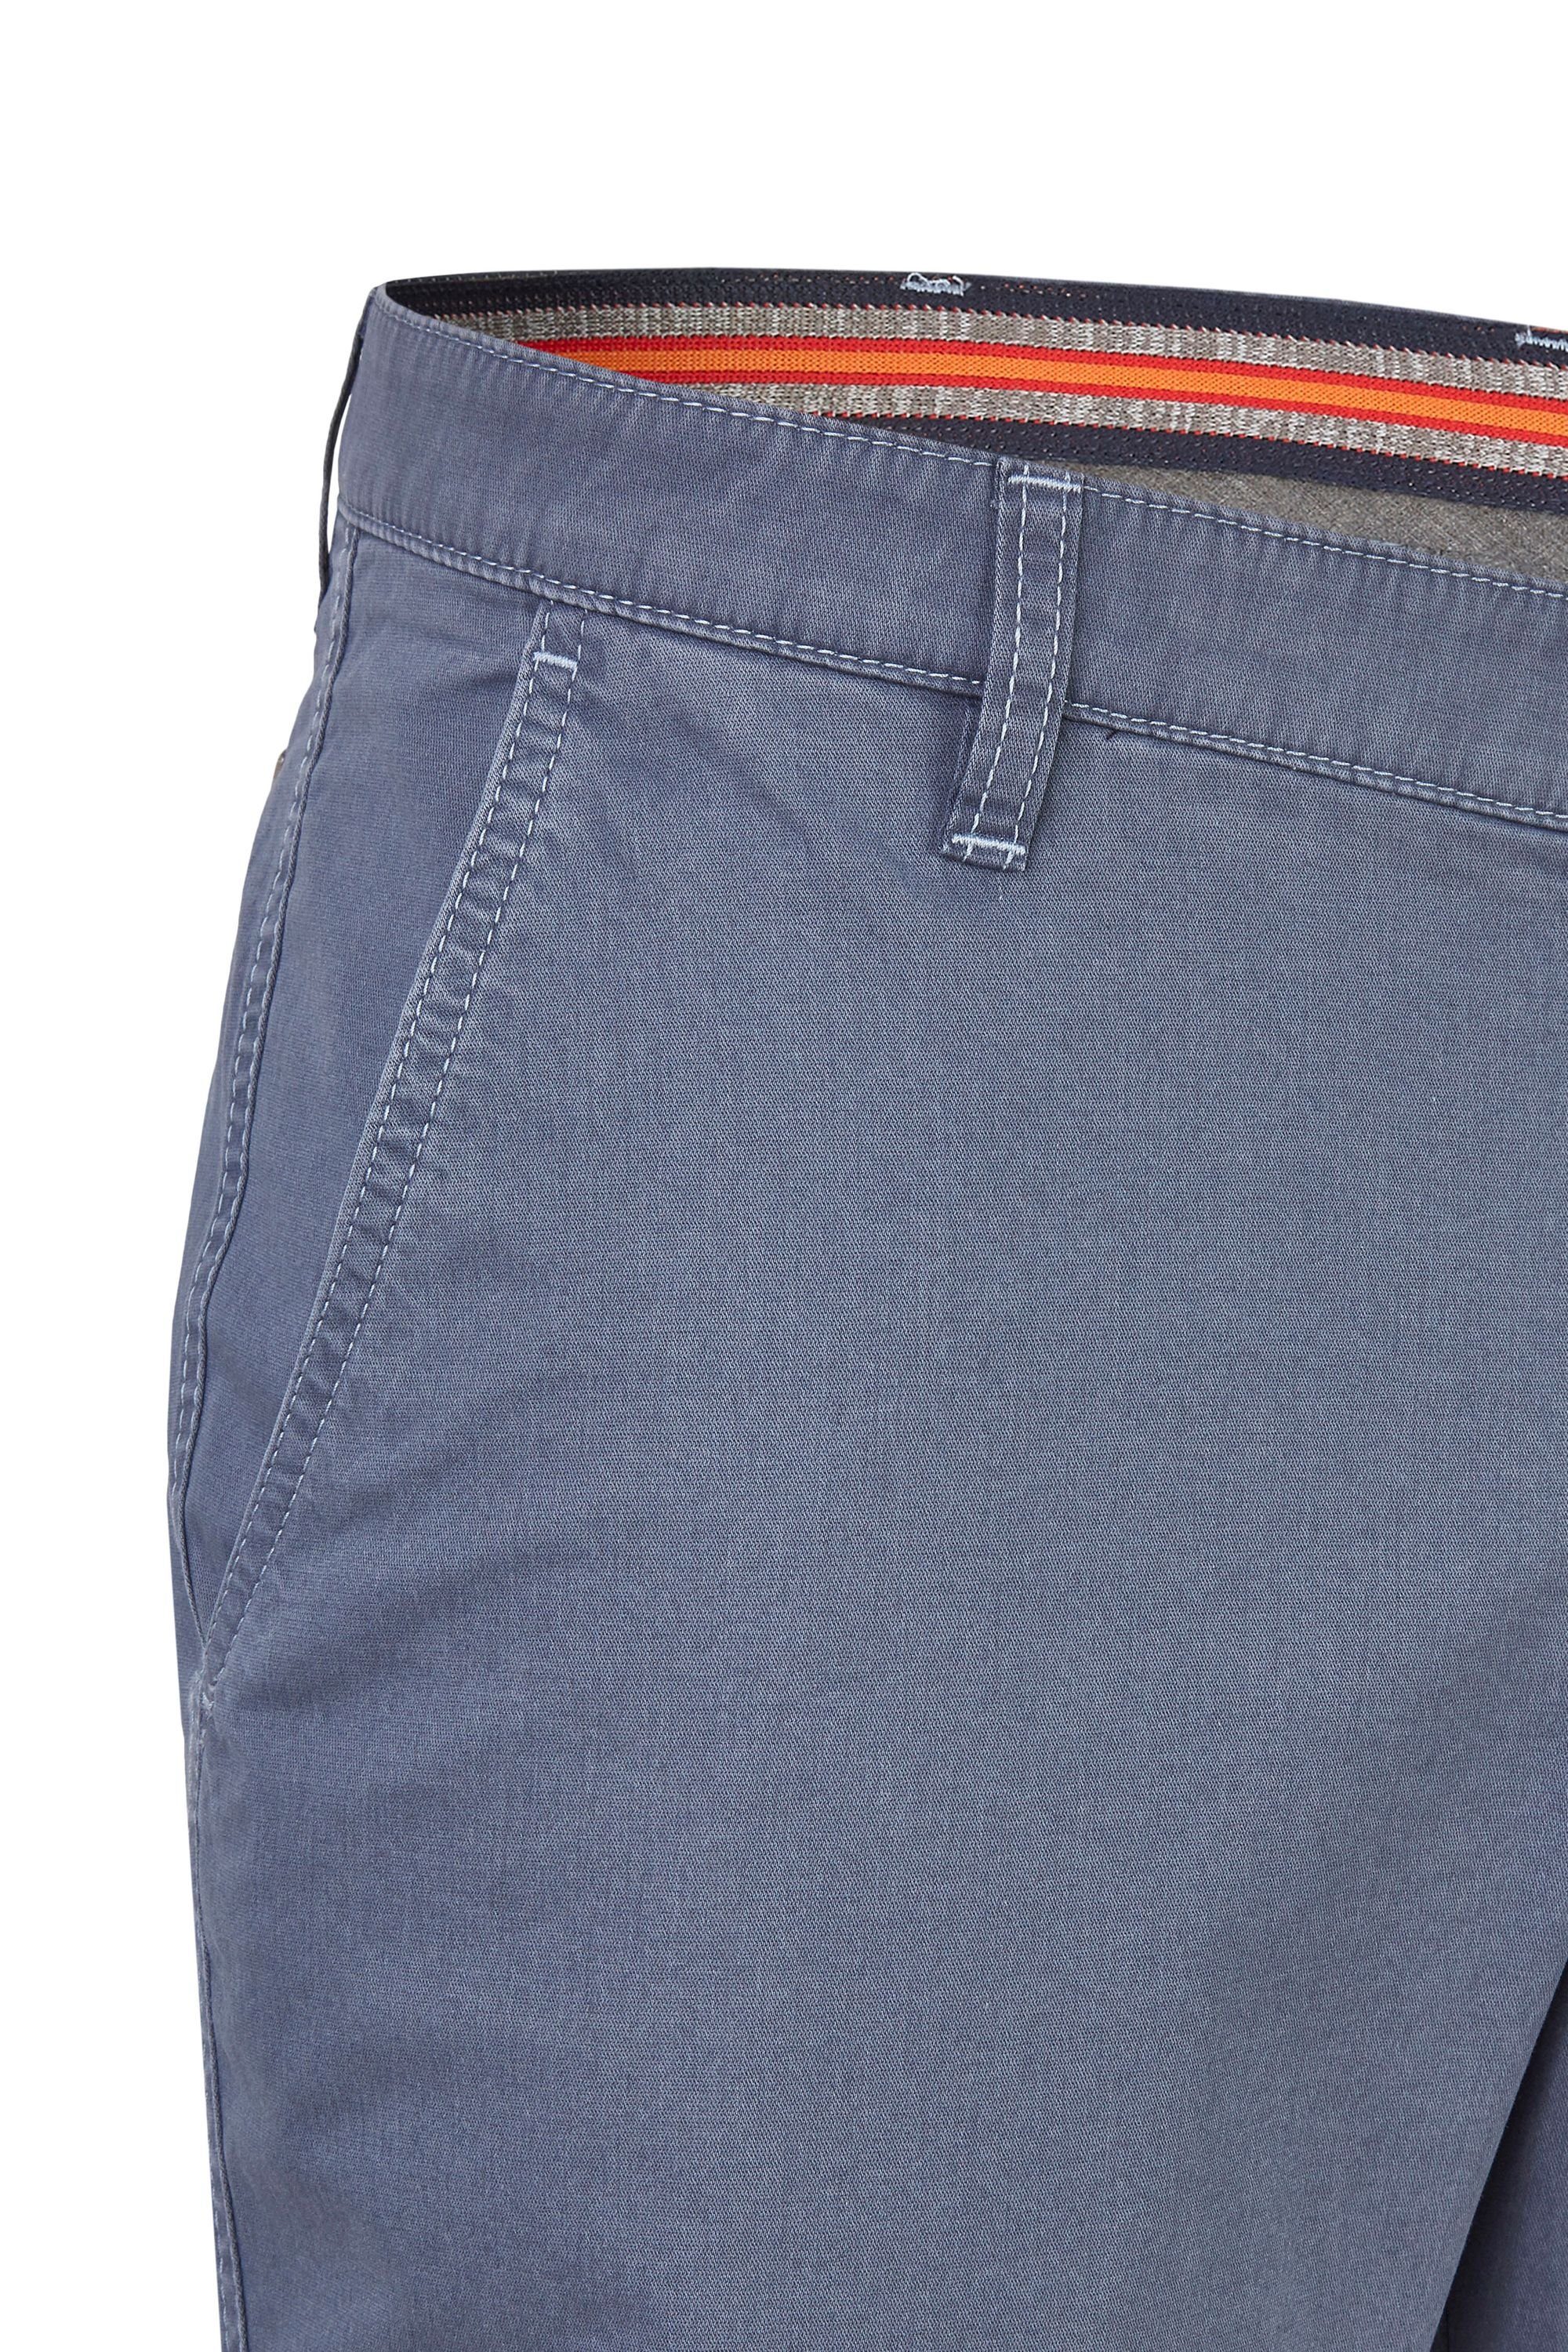 Paisley Herren aubi: Fit Stoffhose High 688 Shorts (44) aubi blau Flex Modell Modern